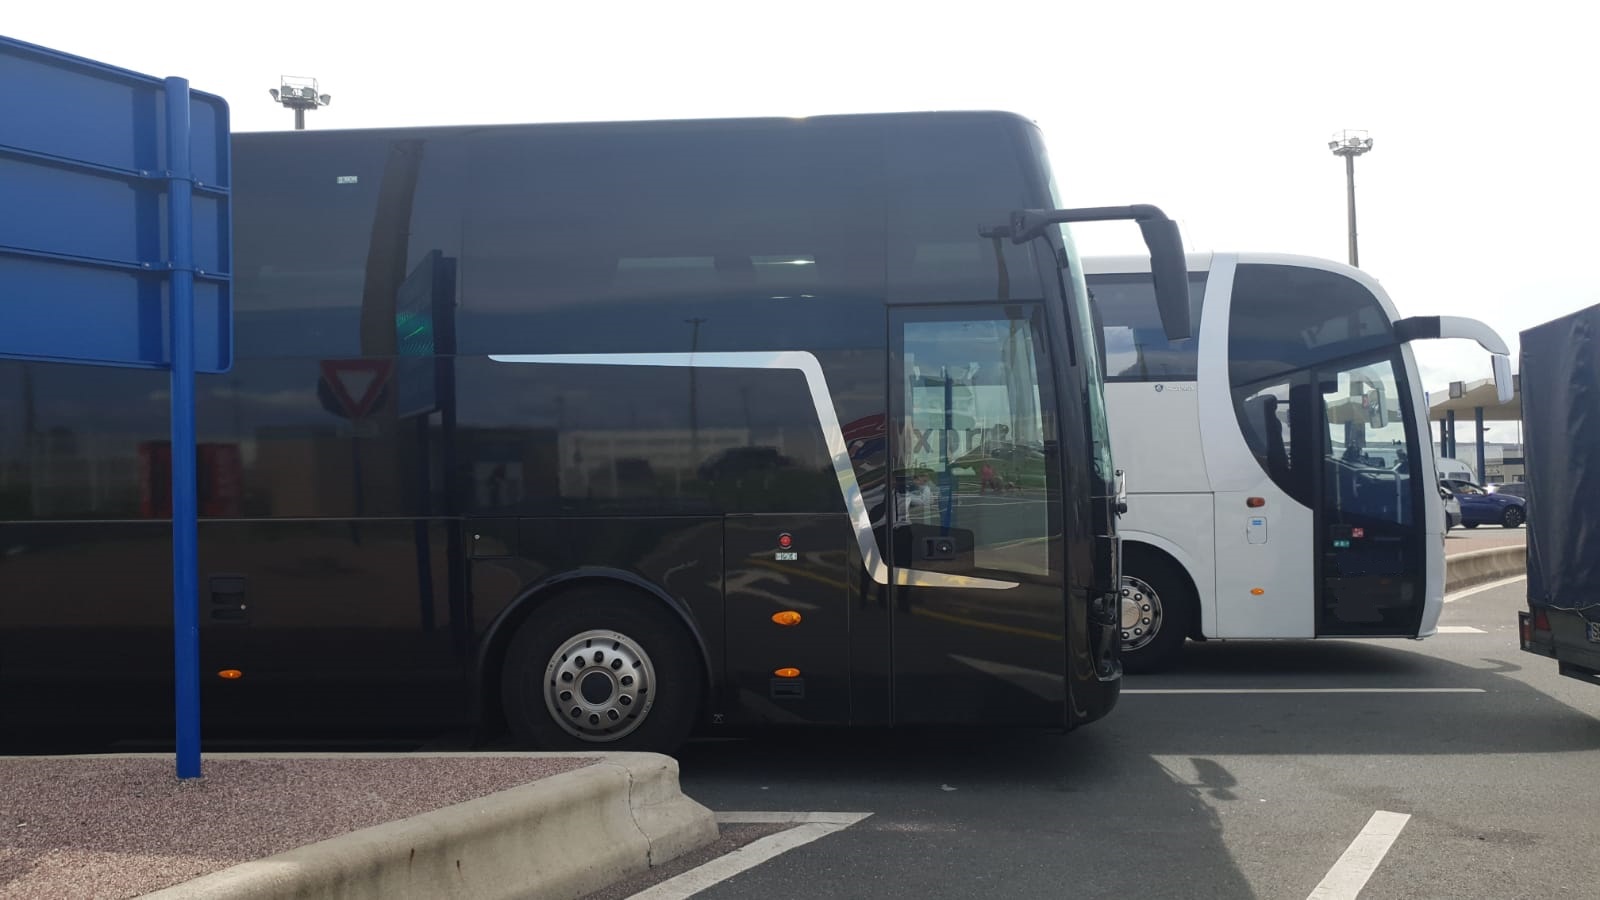 rent buses in Detmold and North-Rhine Westphalia